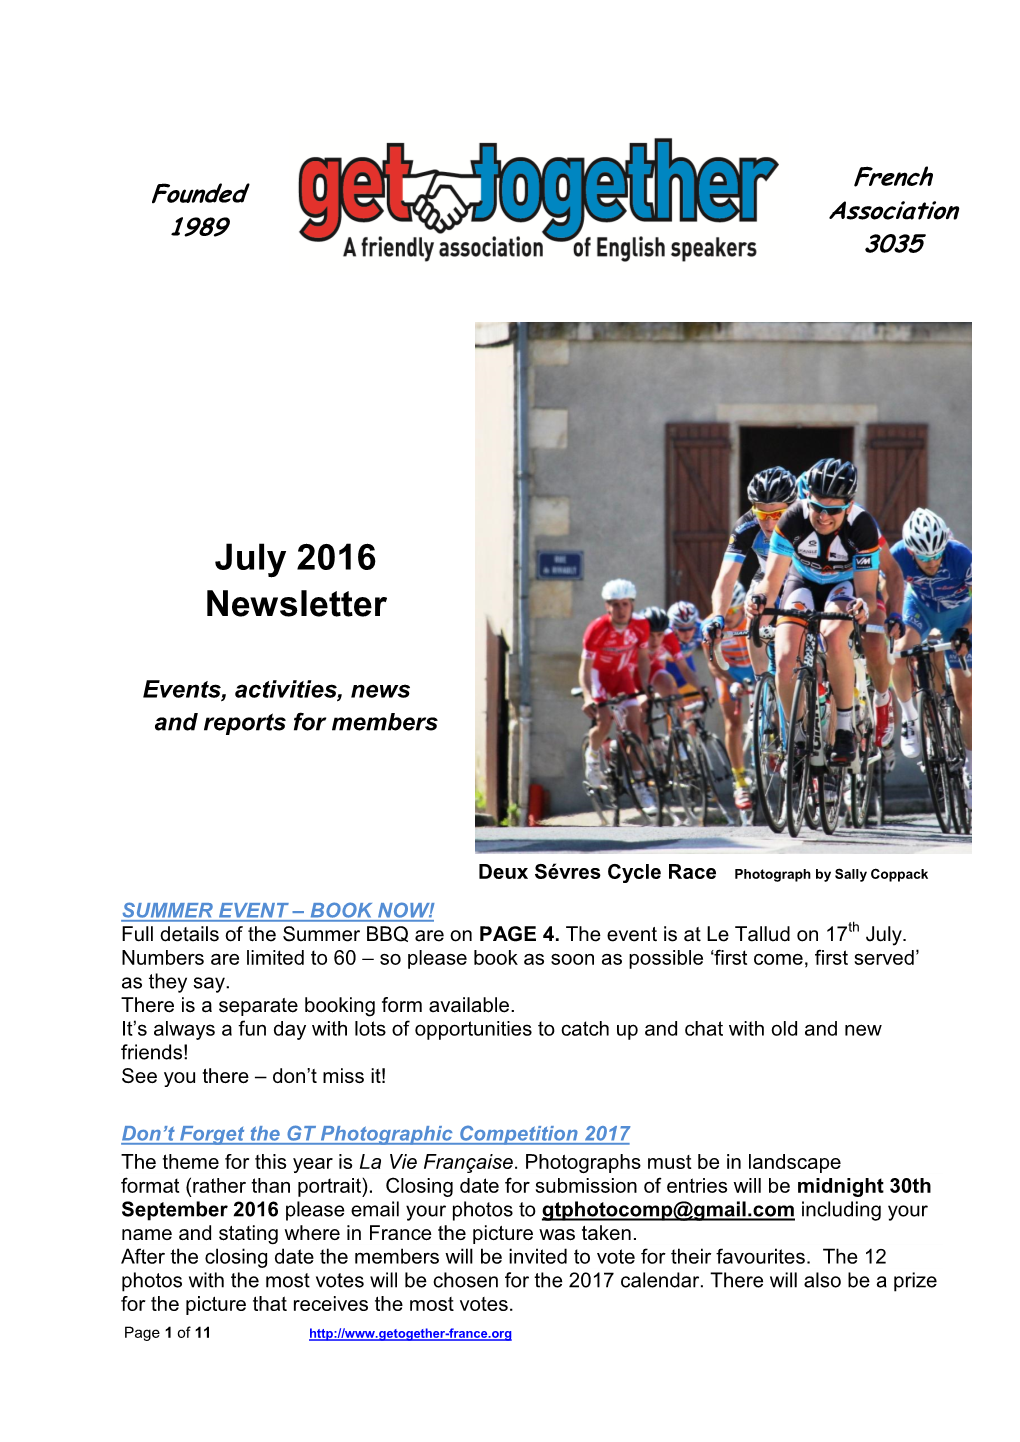 July 2016 Newsletter